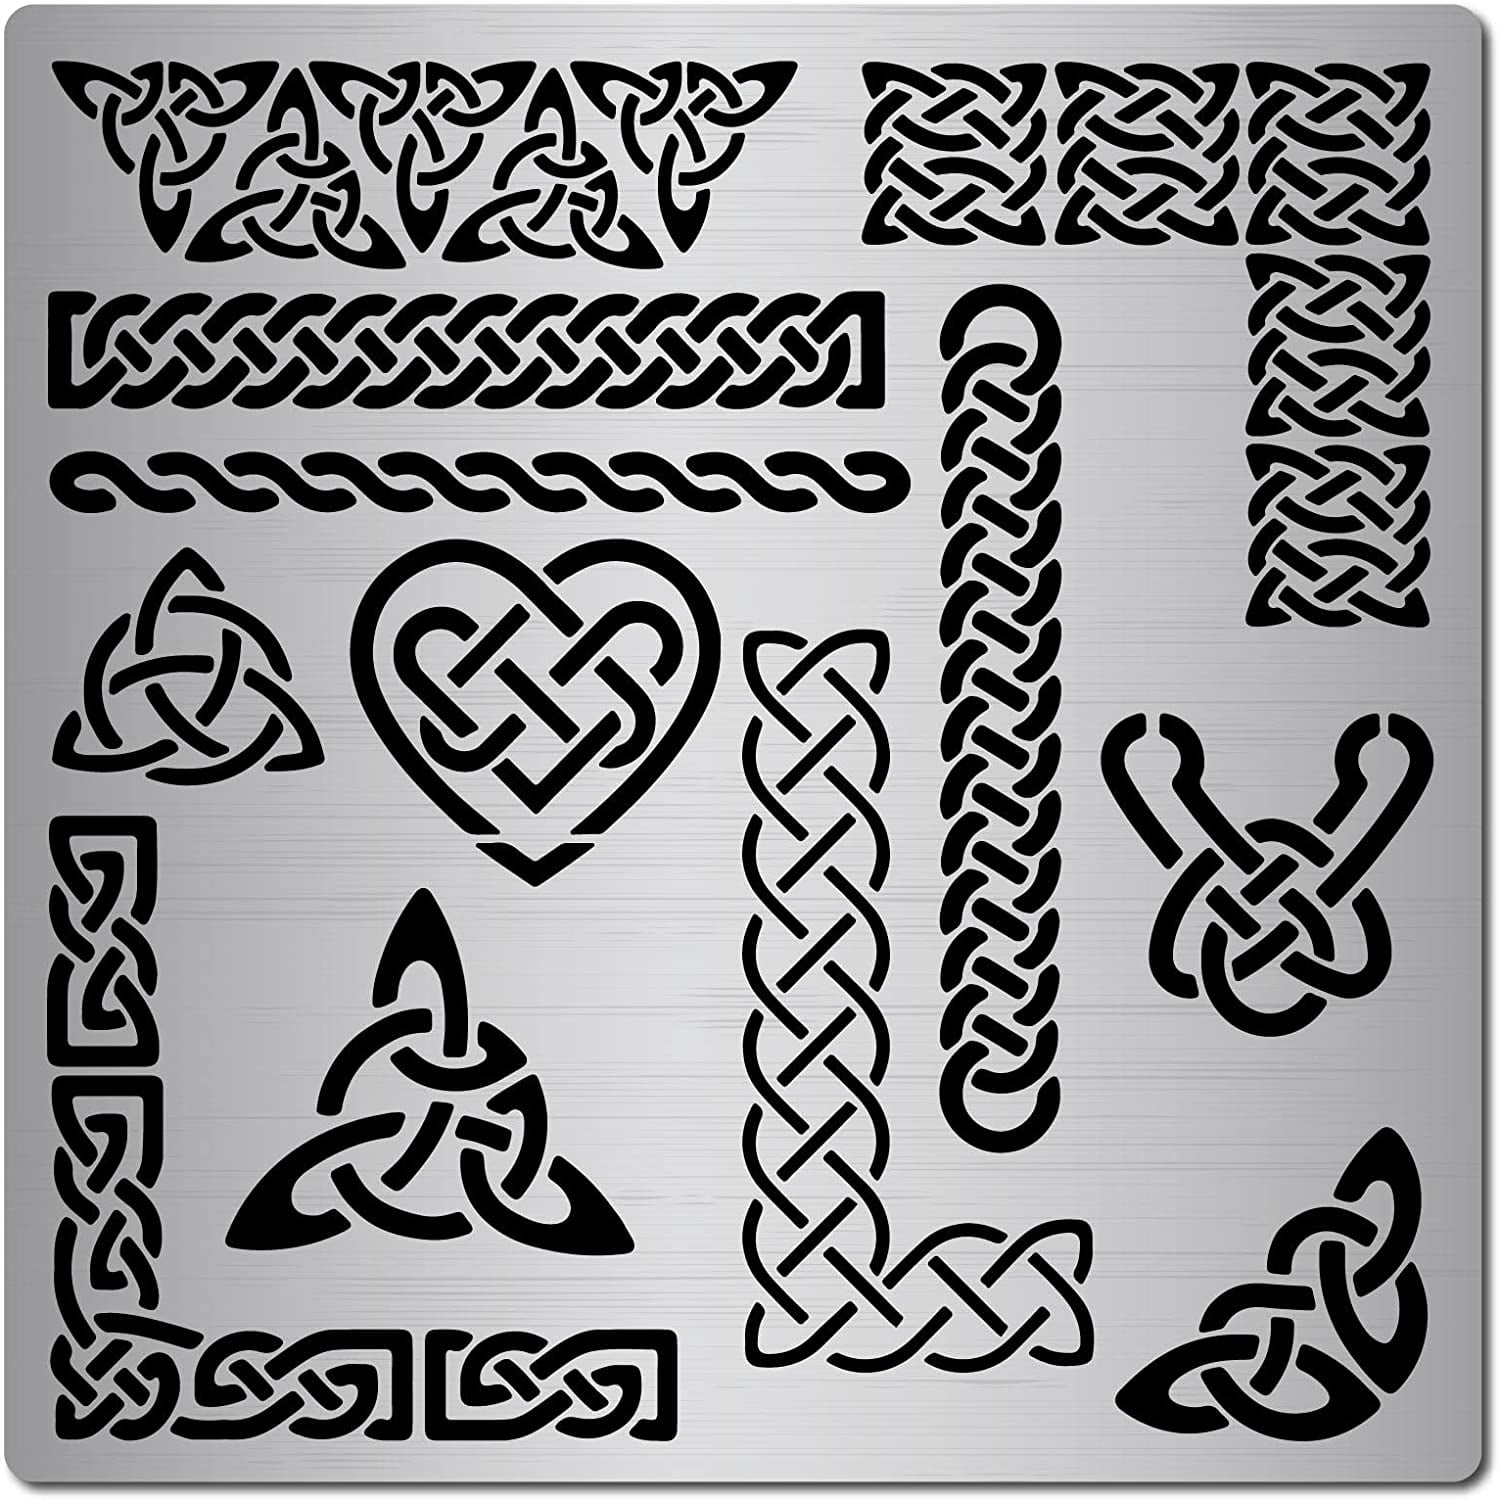 viking designs symbols